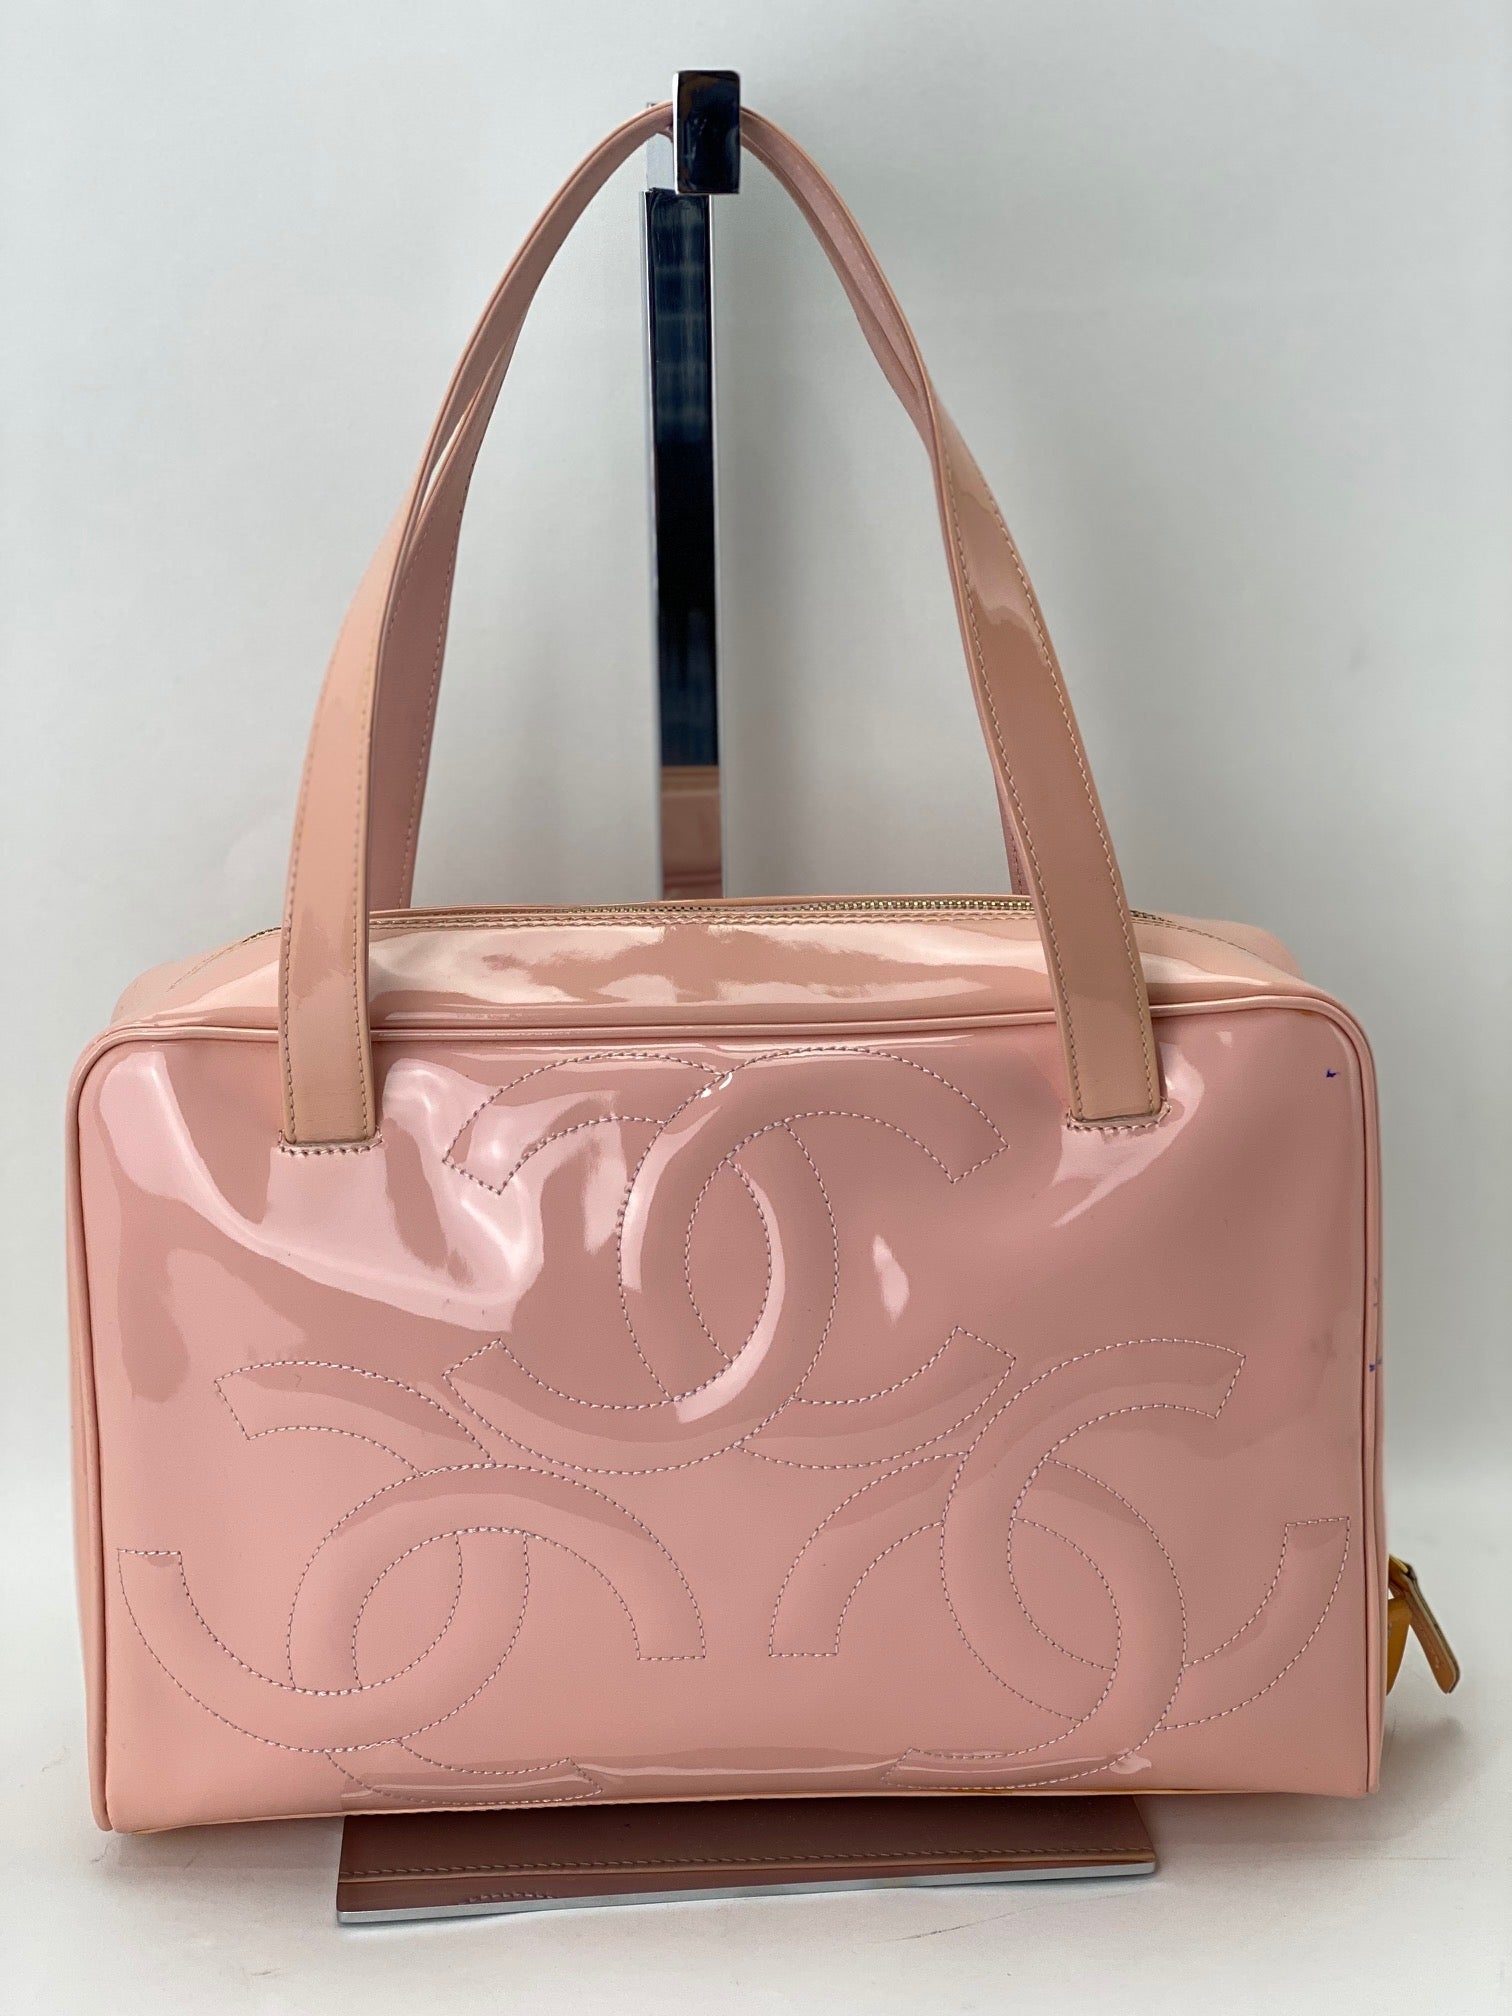 CHANEL Chanel Triple CC Logo Medium Pink Patent Leather Tote